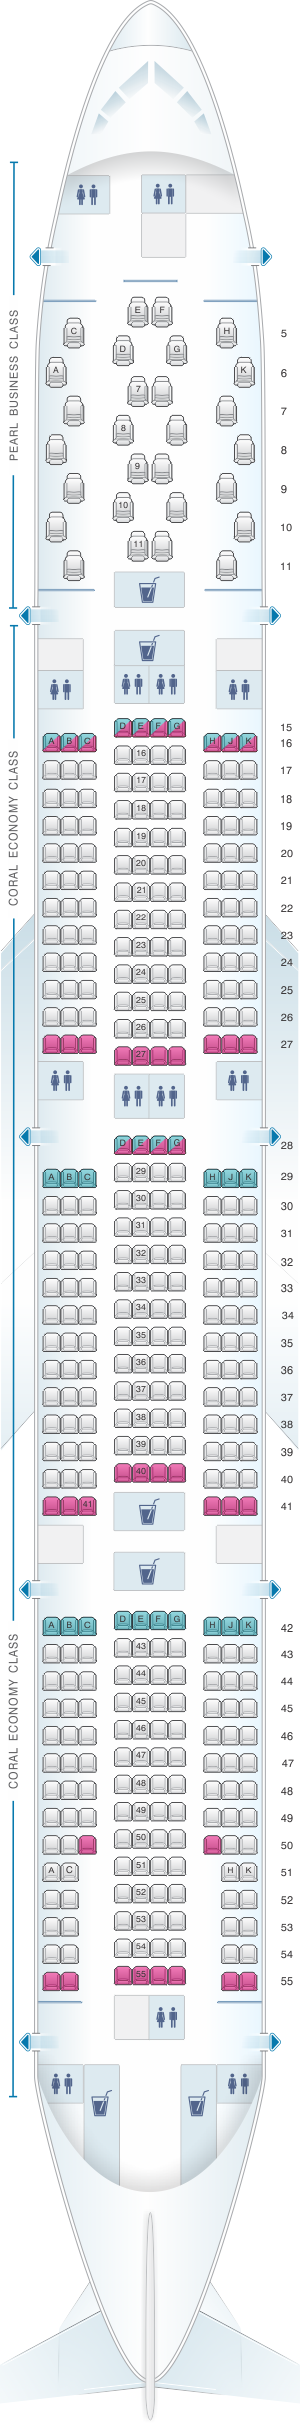 Etihad Boeing 777 Seat Map